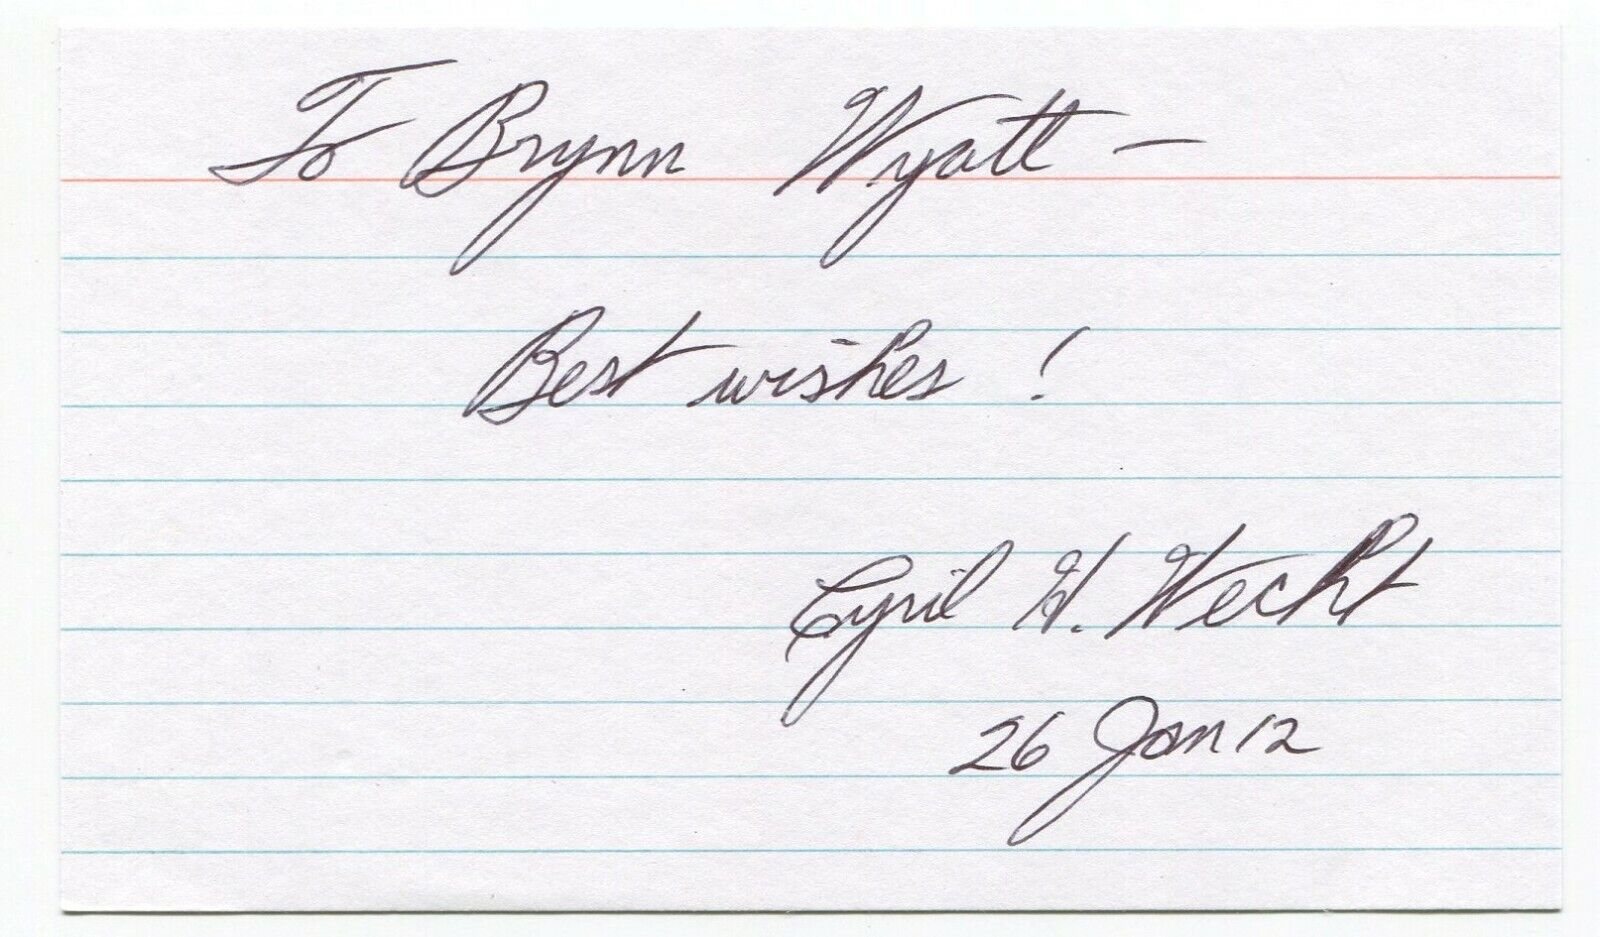 Cyril Wecht Signed 3x5 Index Card Autographed John JFK Assassination